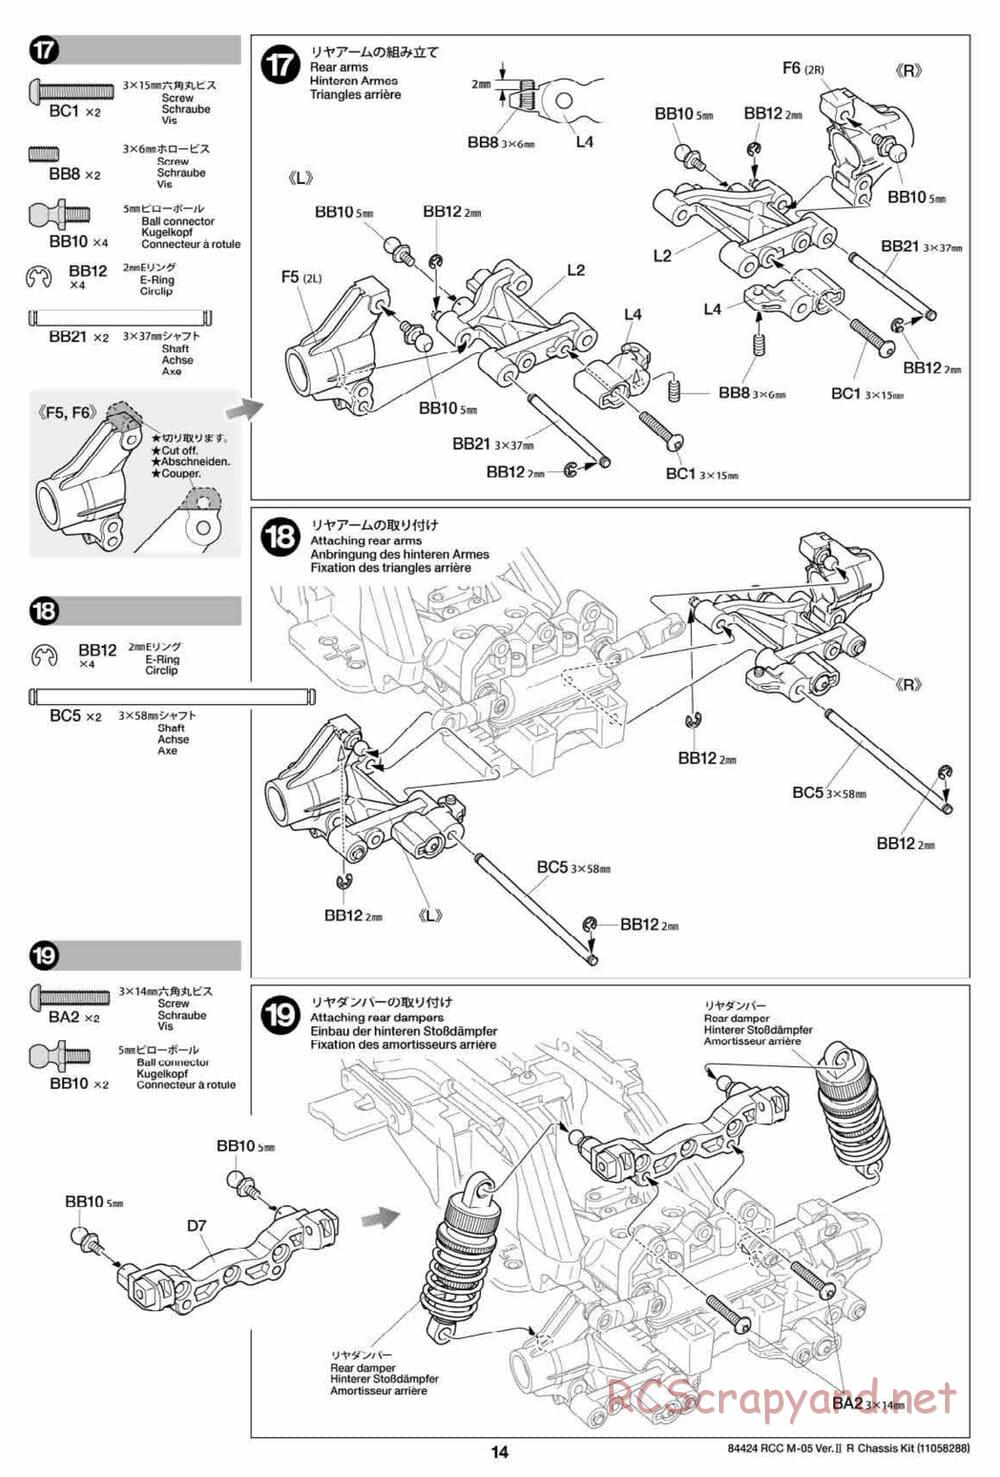 Tamiya - M-05 Ver.II R Chassis Chassis - Manual - Page 14